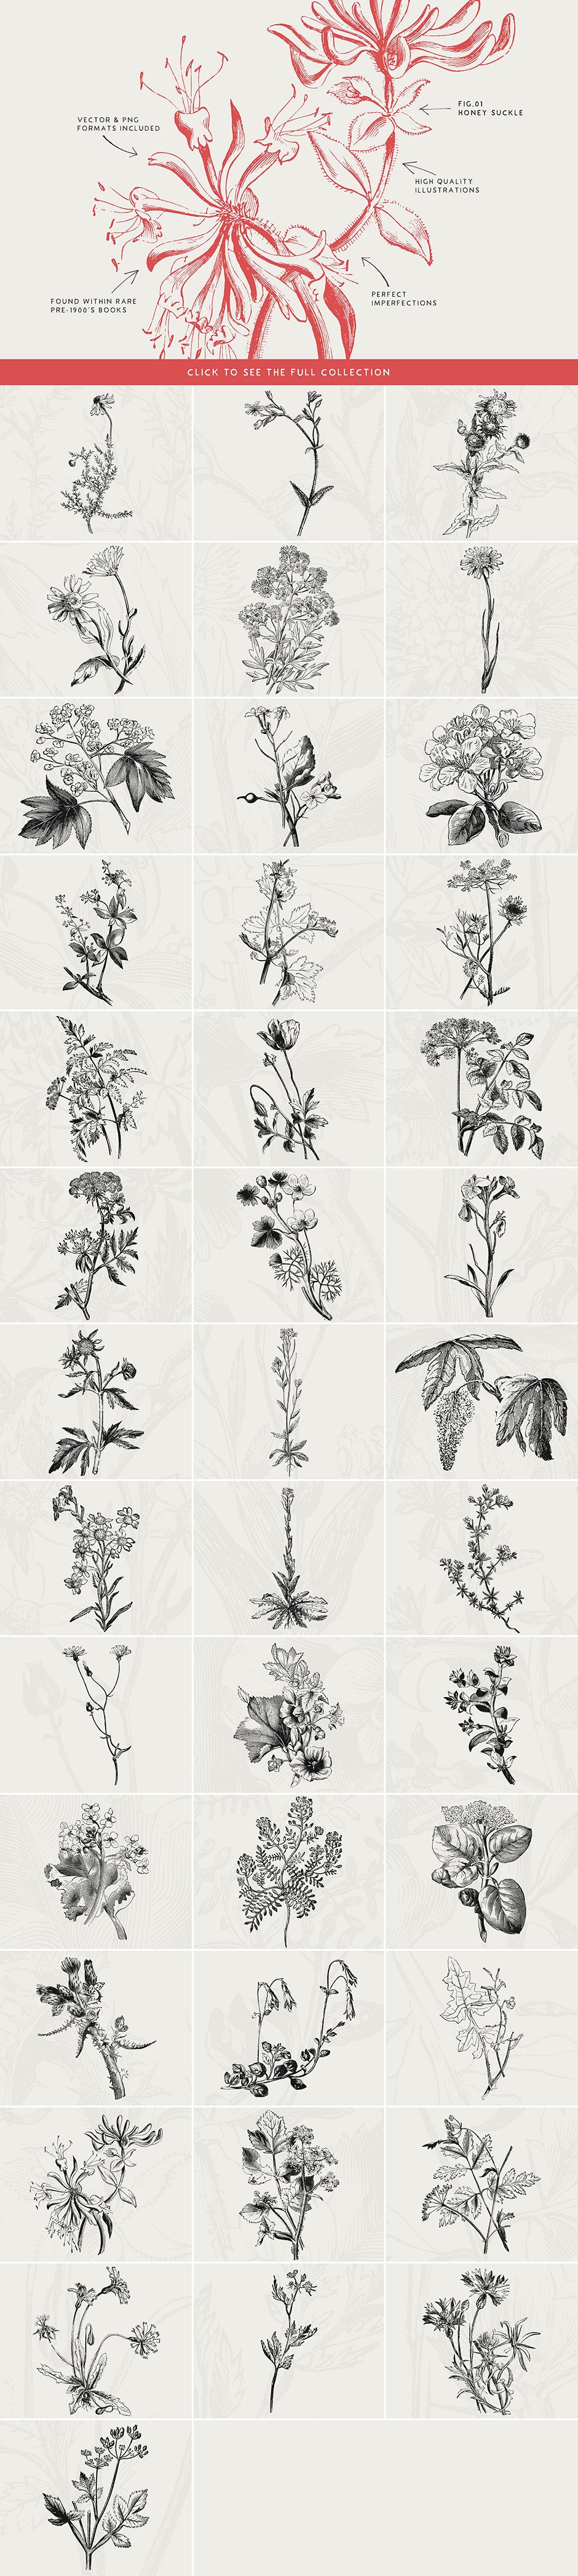 40 Plant & Flower Illustrations No. 5